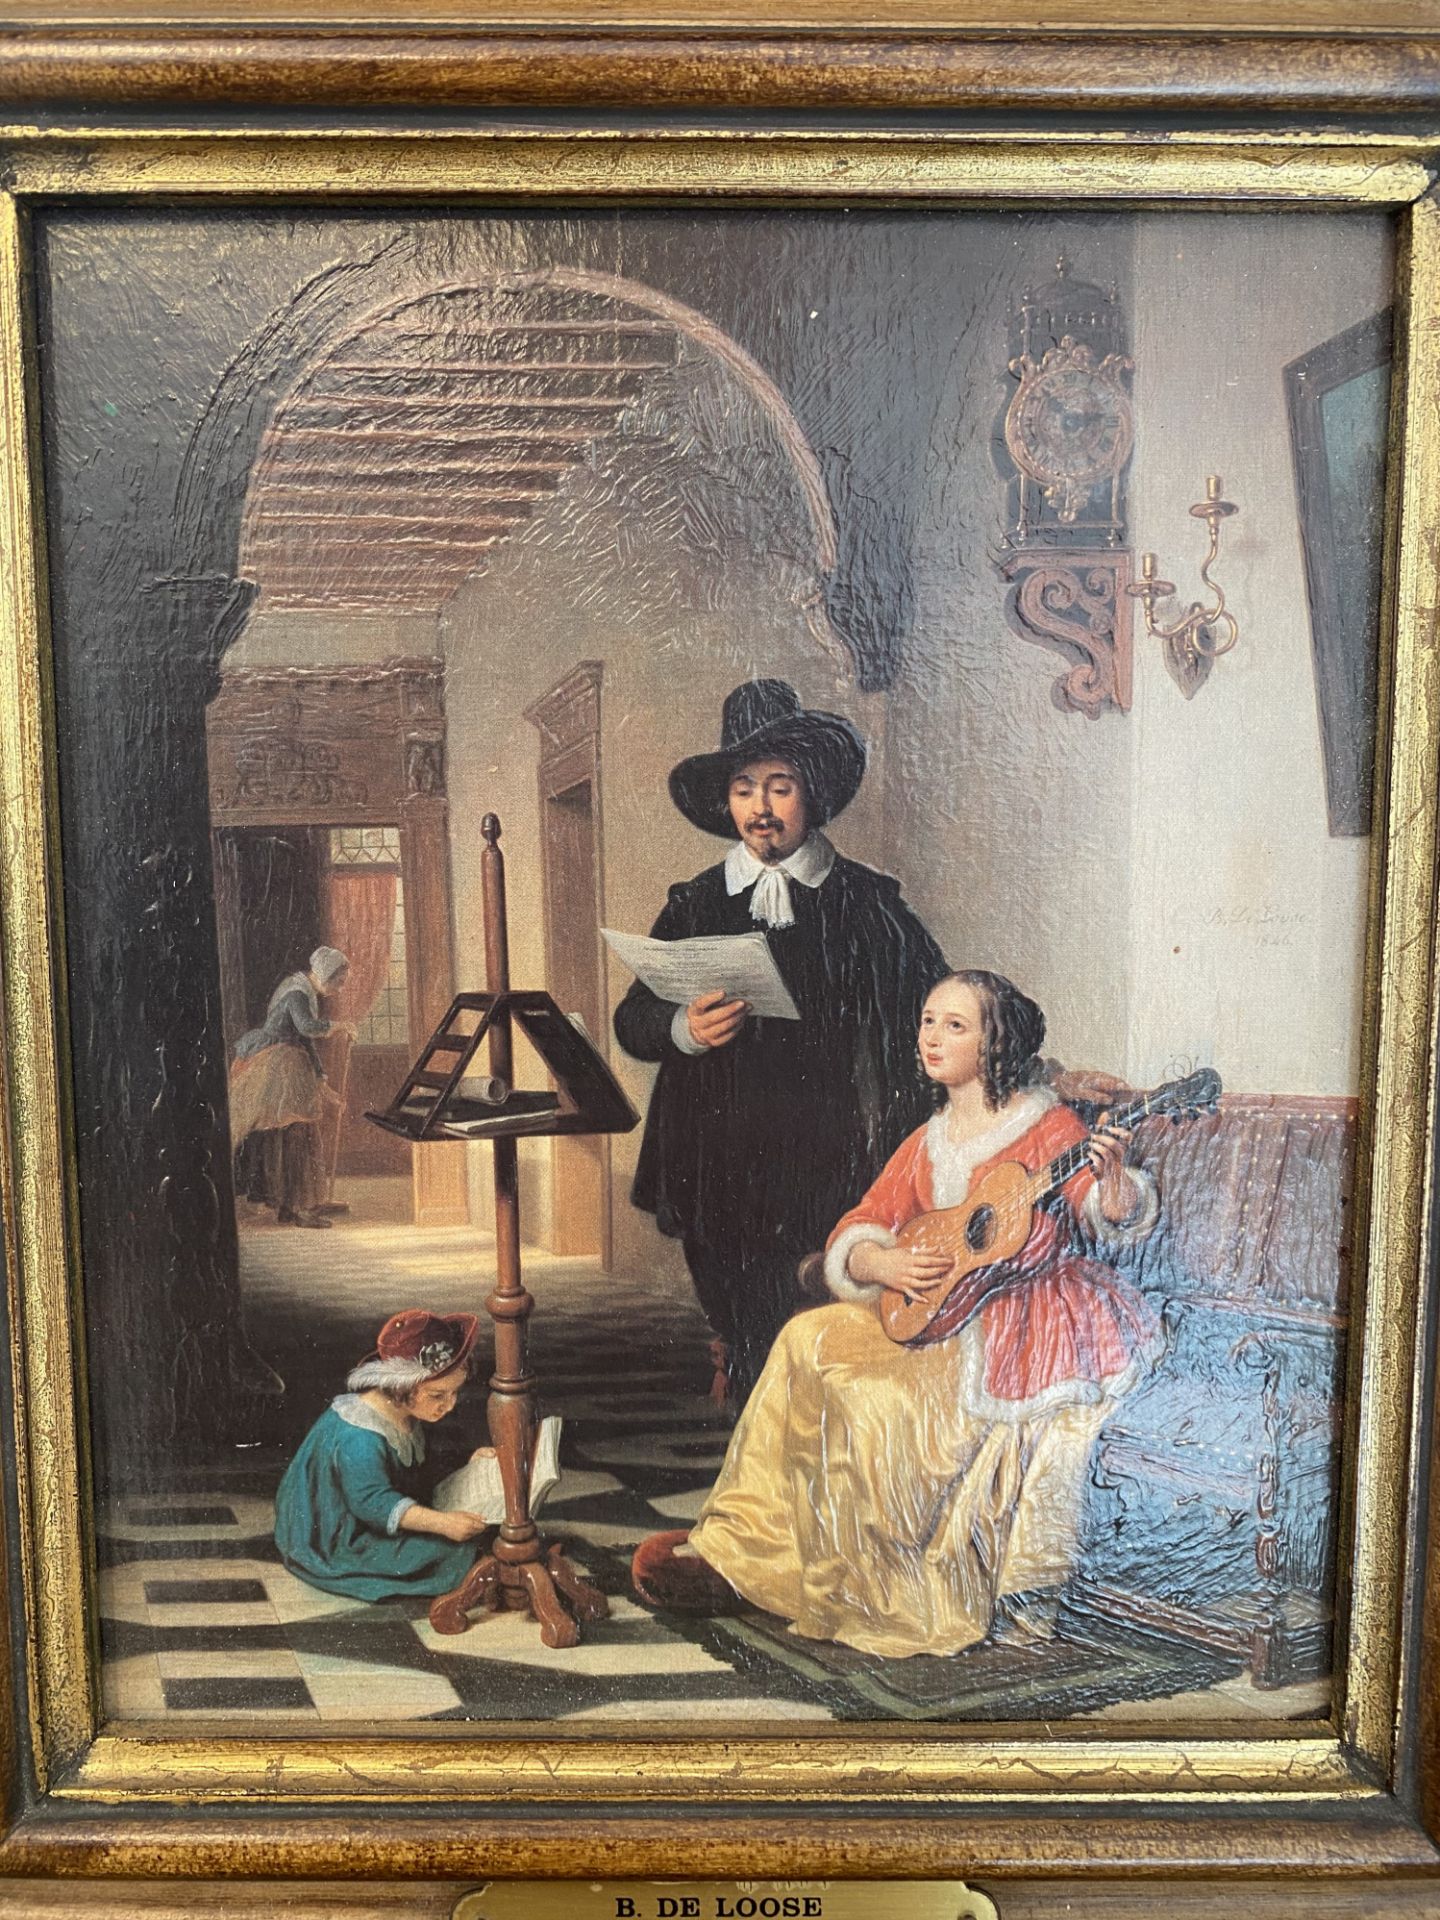 Oil on Canvas B,De Loose (1809-1885) 19th Century - Image 3 of 5